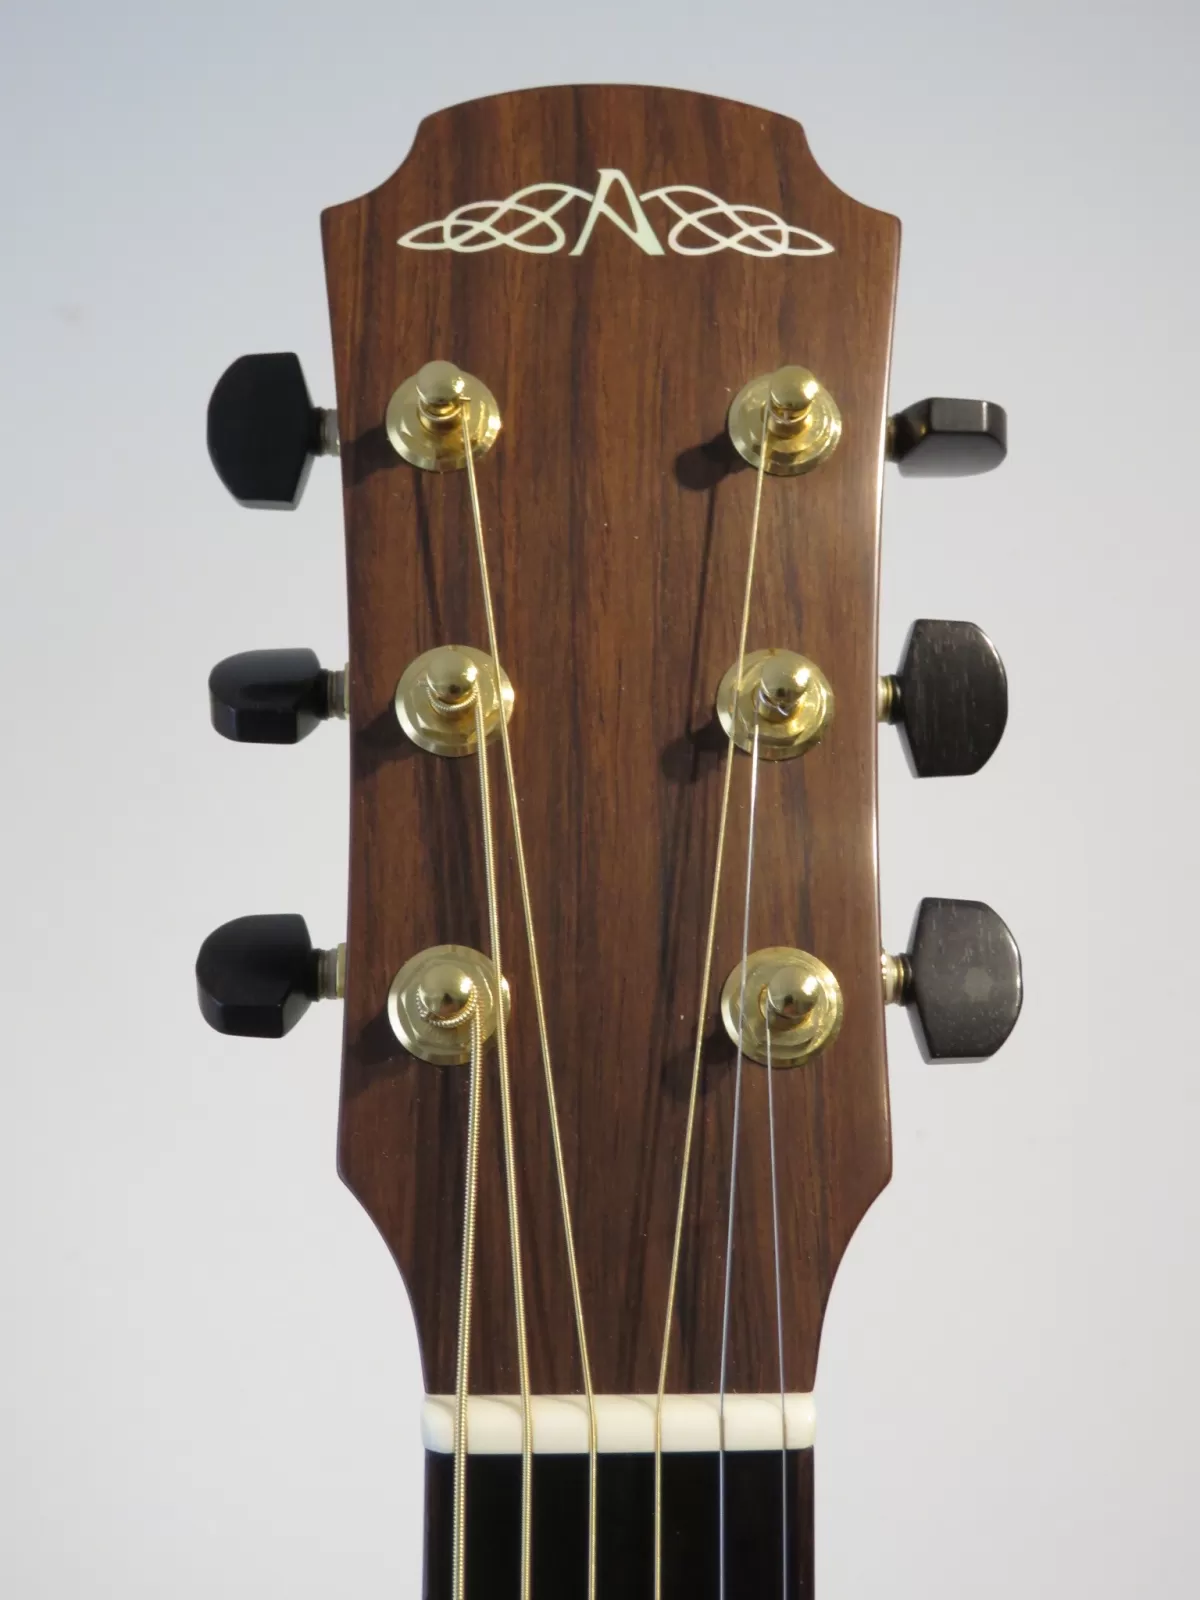 Avalon L2-20C Jumbo Cutaway Acoustic Guitar - Superb Near Mint with Case